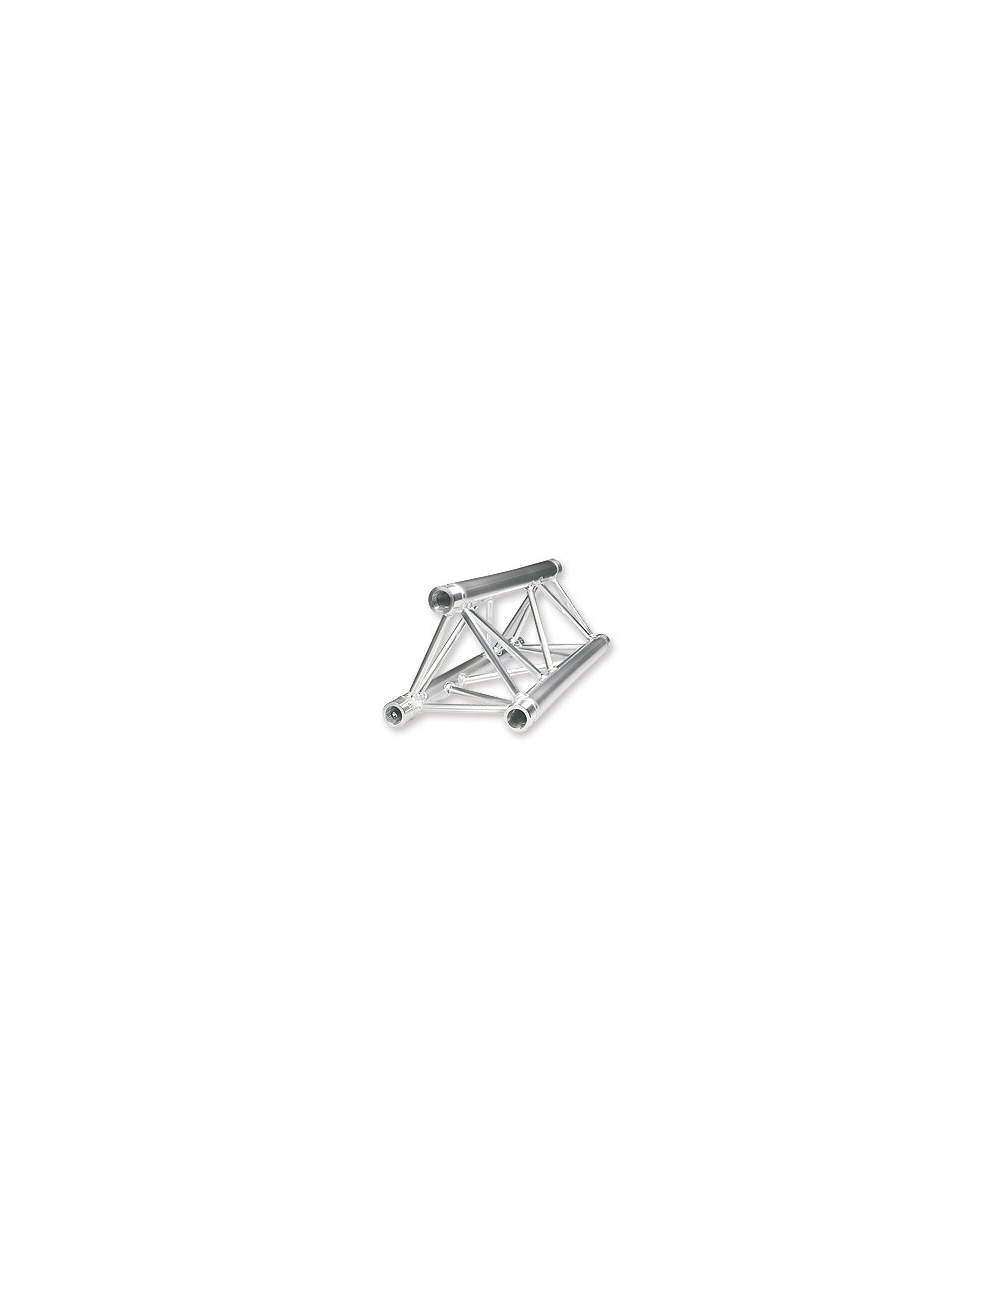 Structure triangulaire 290 ASD 1m50 - SX29150